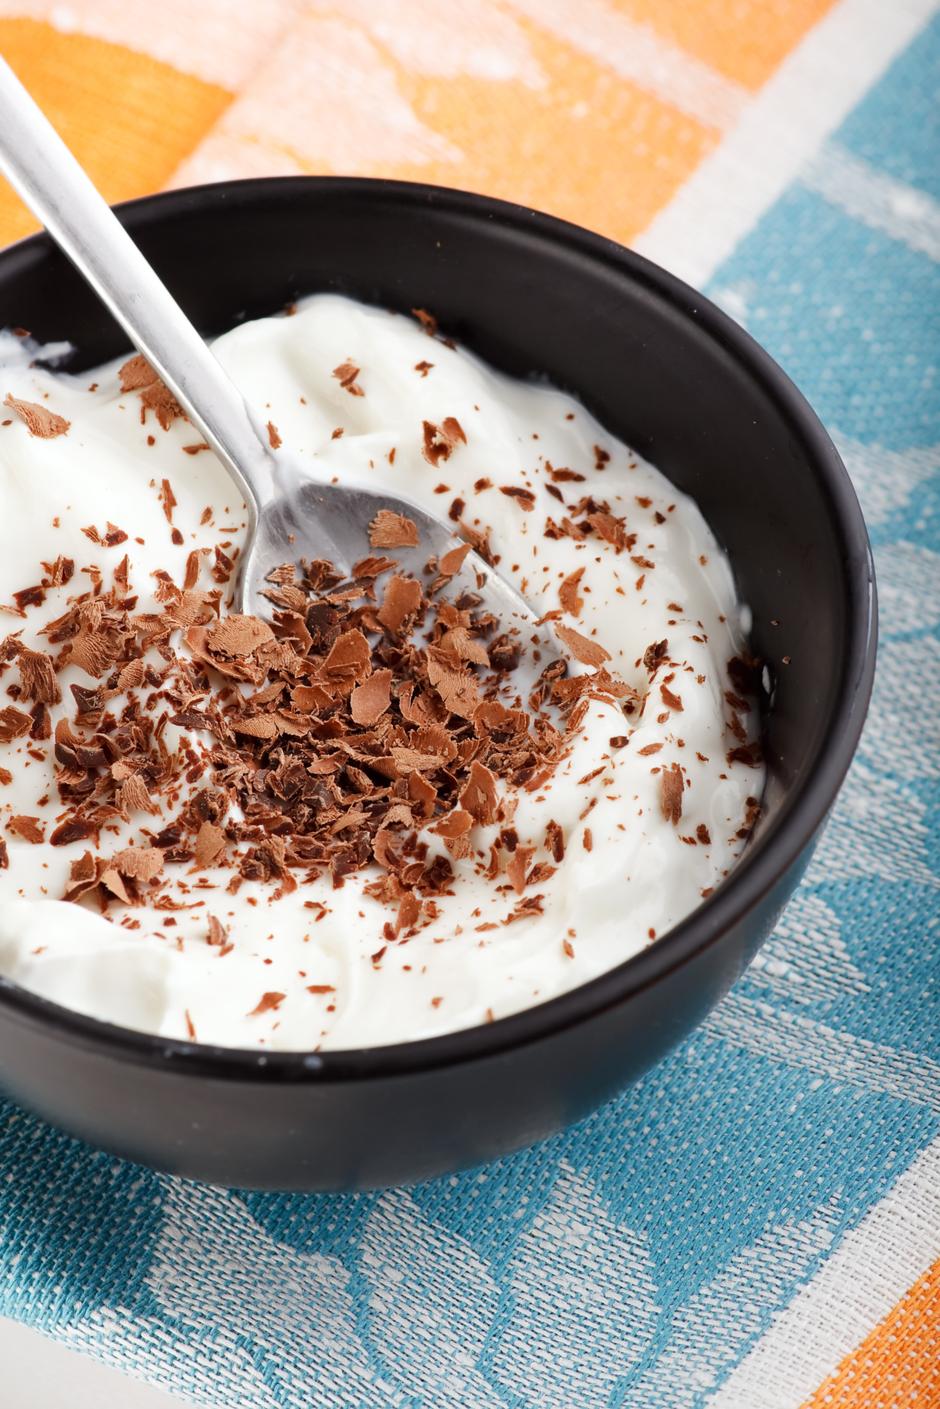 jogurt i čokolada | Author: Thinkstock